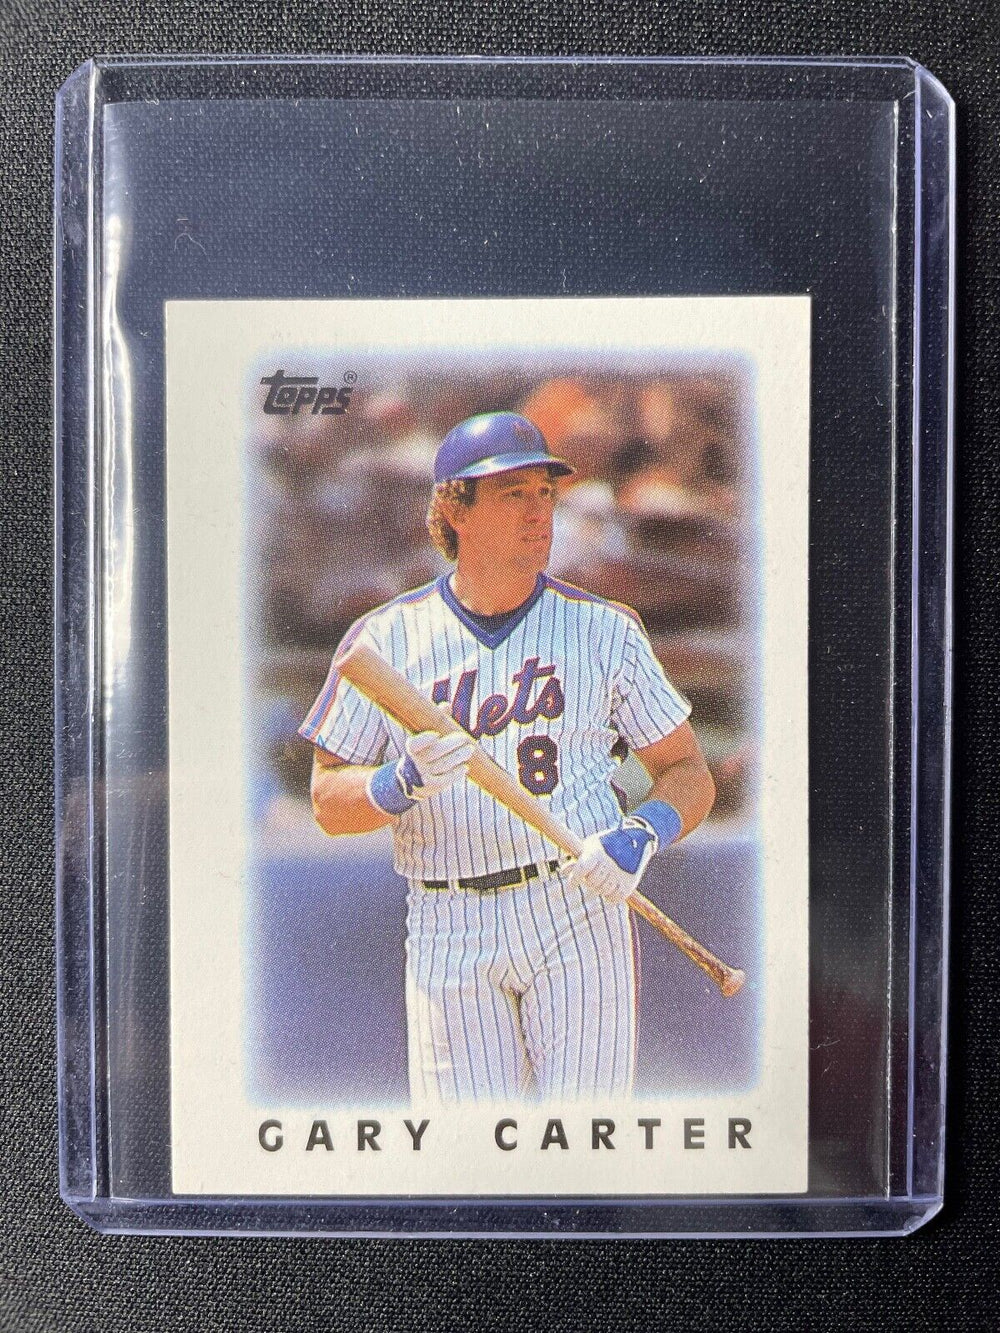 Gary Carter 1986 Topps Mini Leaders Series Mint Card #50